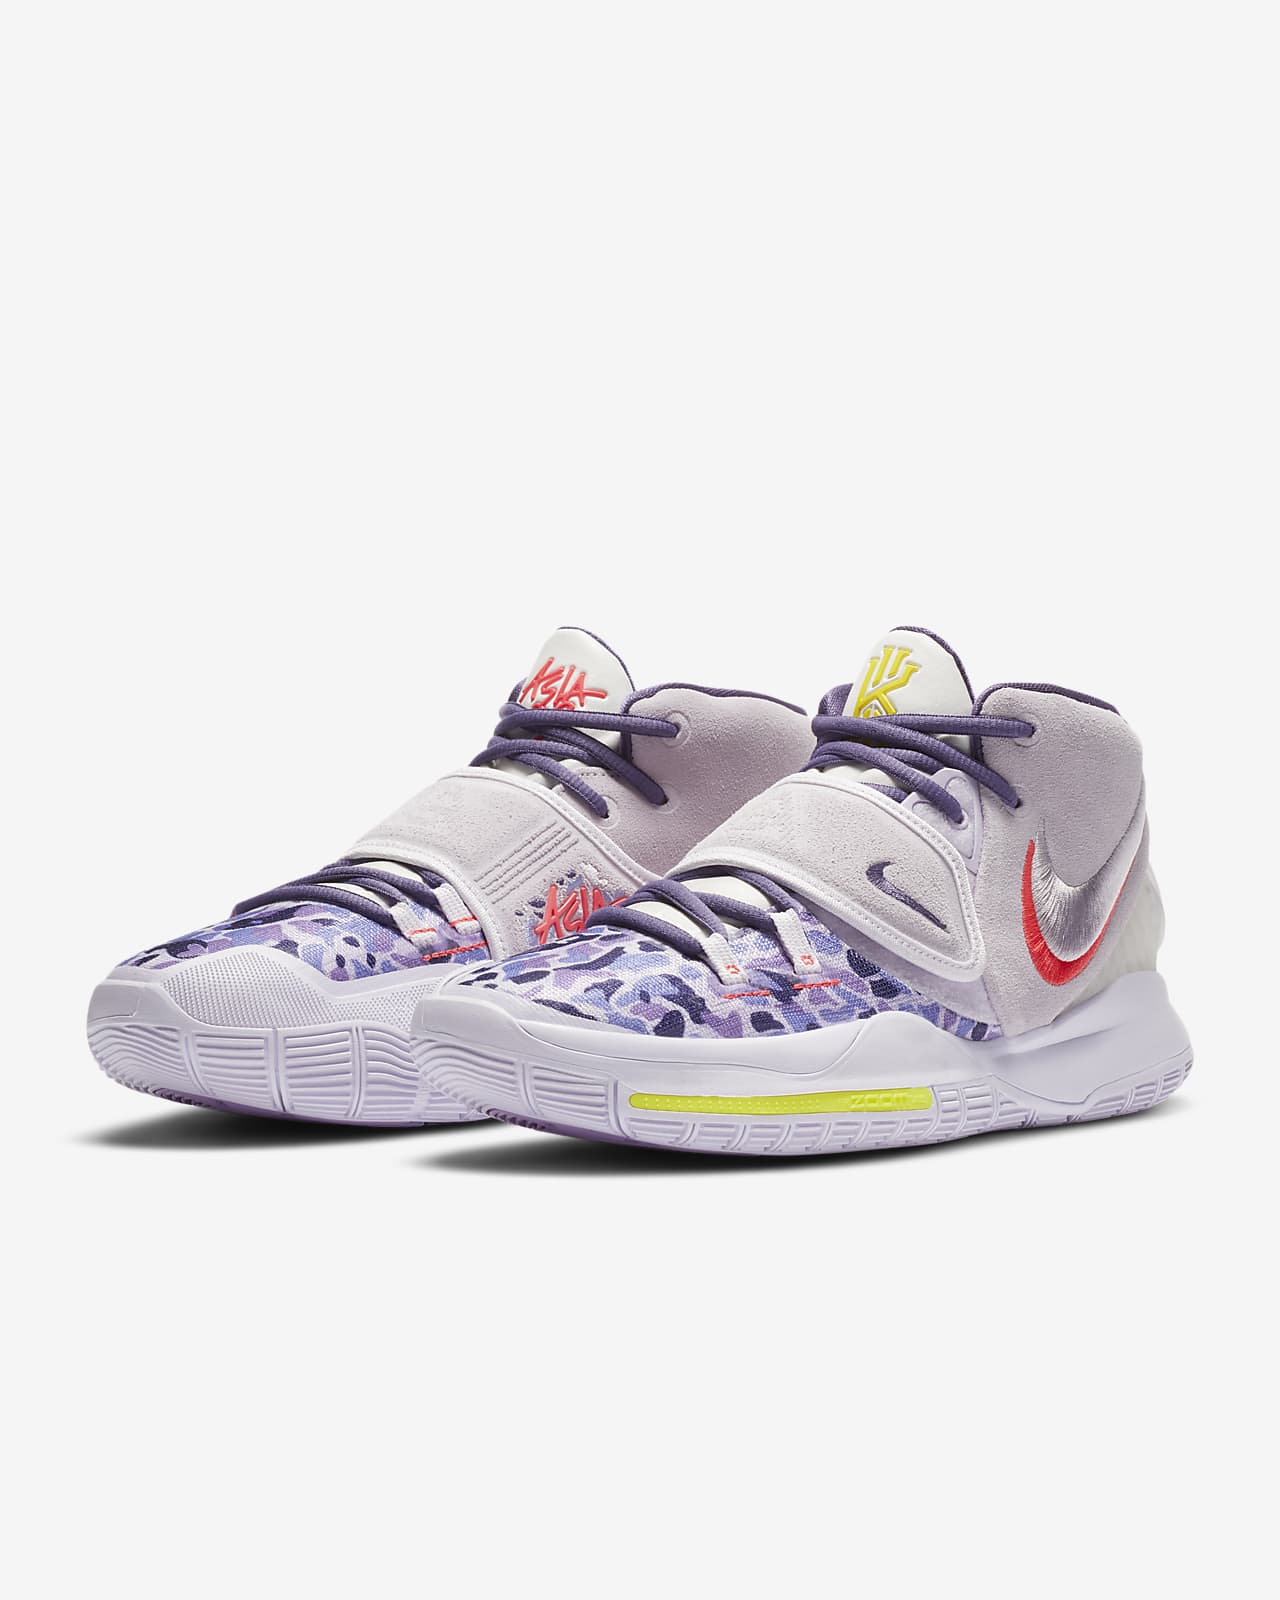 Sepatu Model Nike Kyrie 6 Bahan NYC untuk Pria Shopee